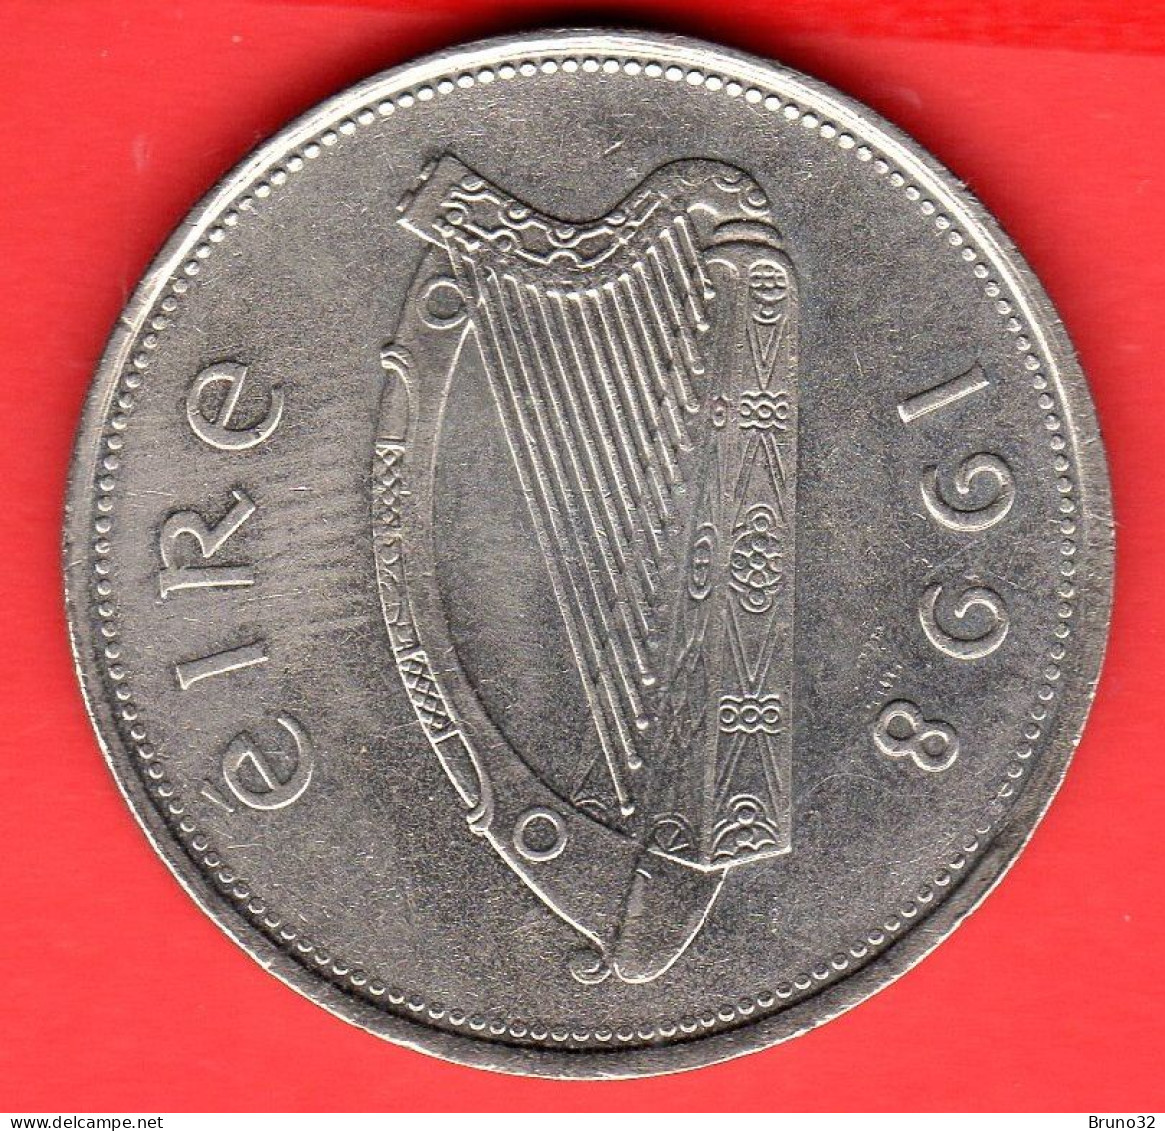 IRLANDA - IRELAND - EIRE - 1998 - 1 Pound - QFDC/aUNC - Come Da Foto - Ireland